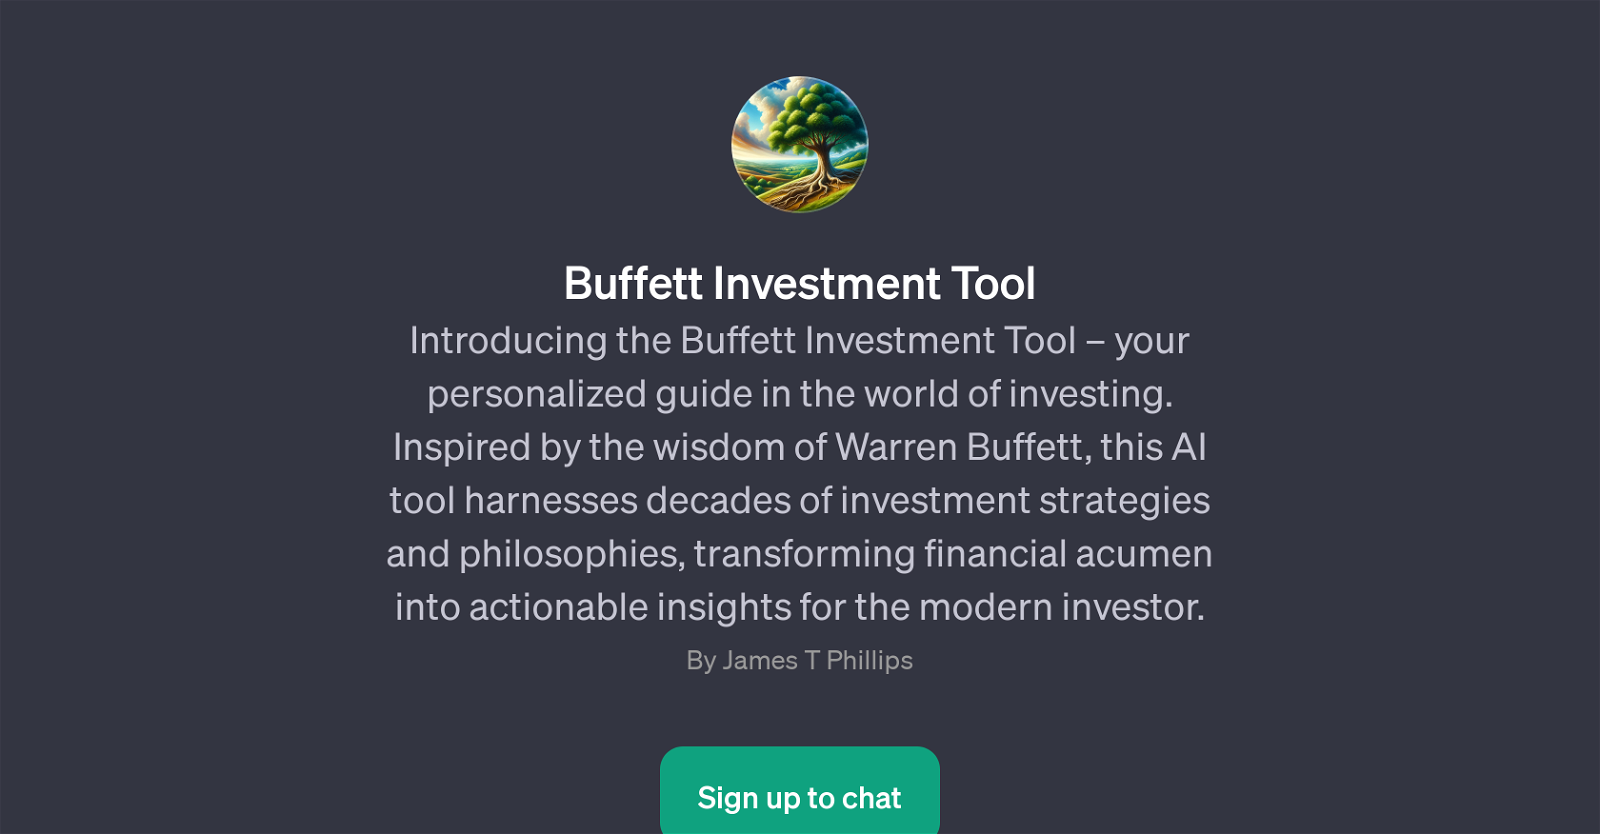 Buffett Investment Tool website